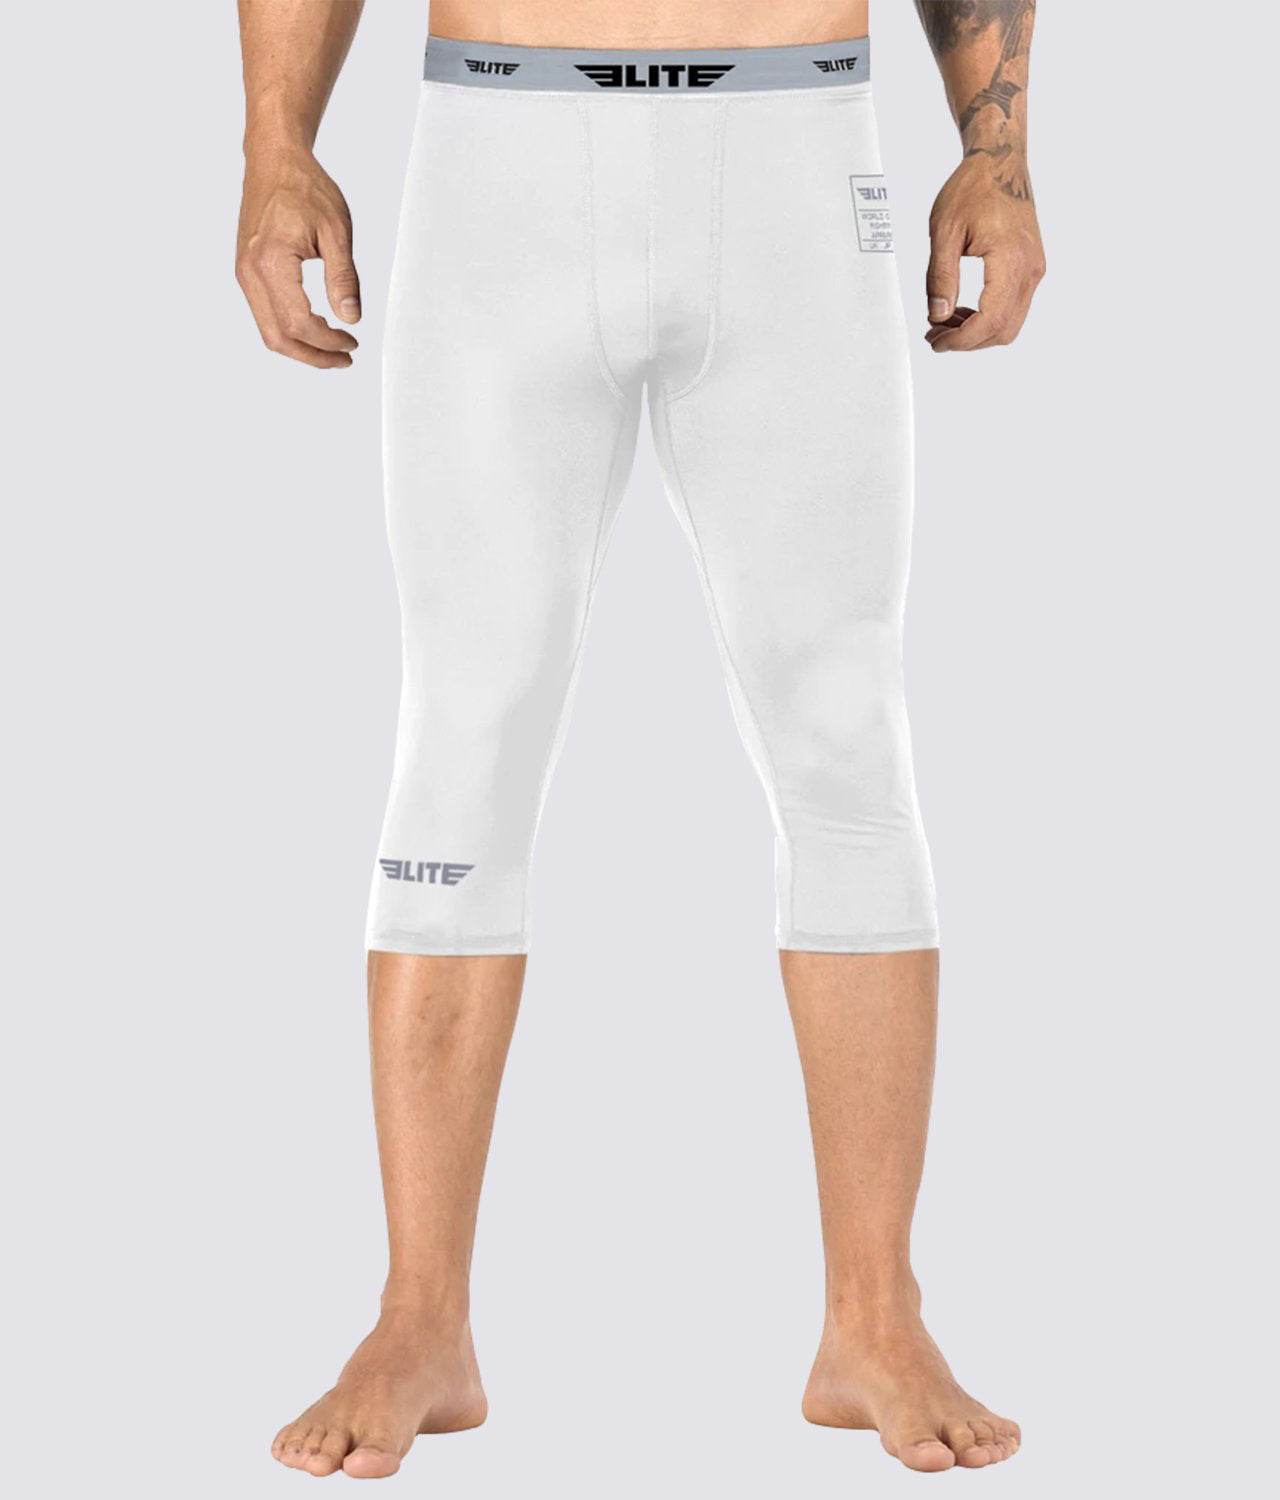 Elite Sports Plain White Compression Judo Spat Pants